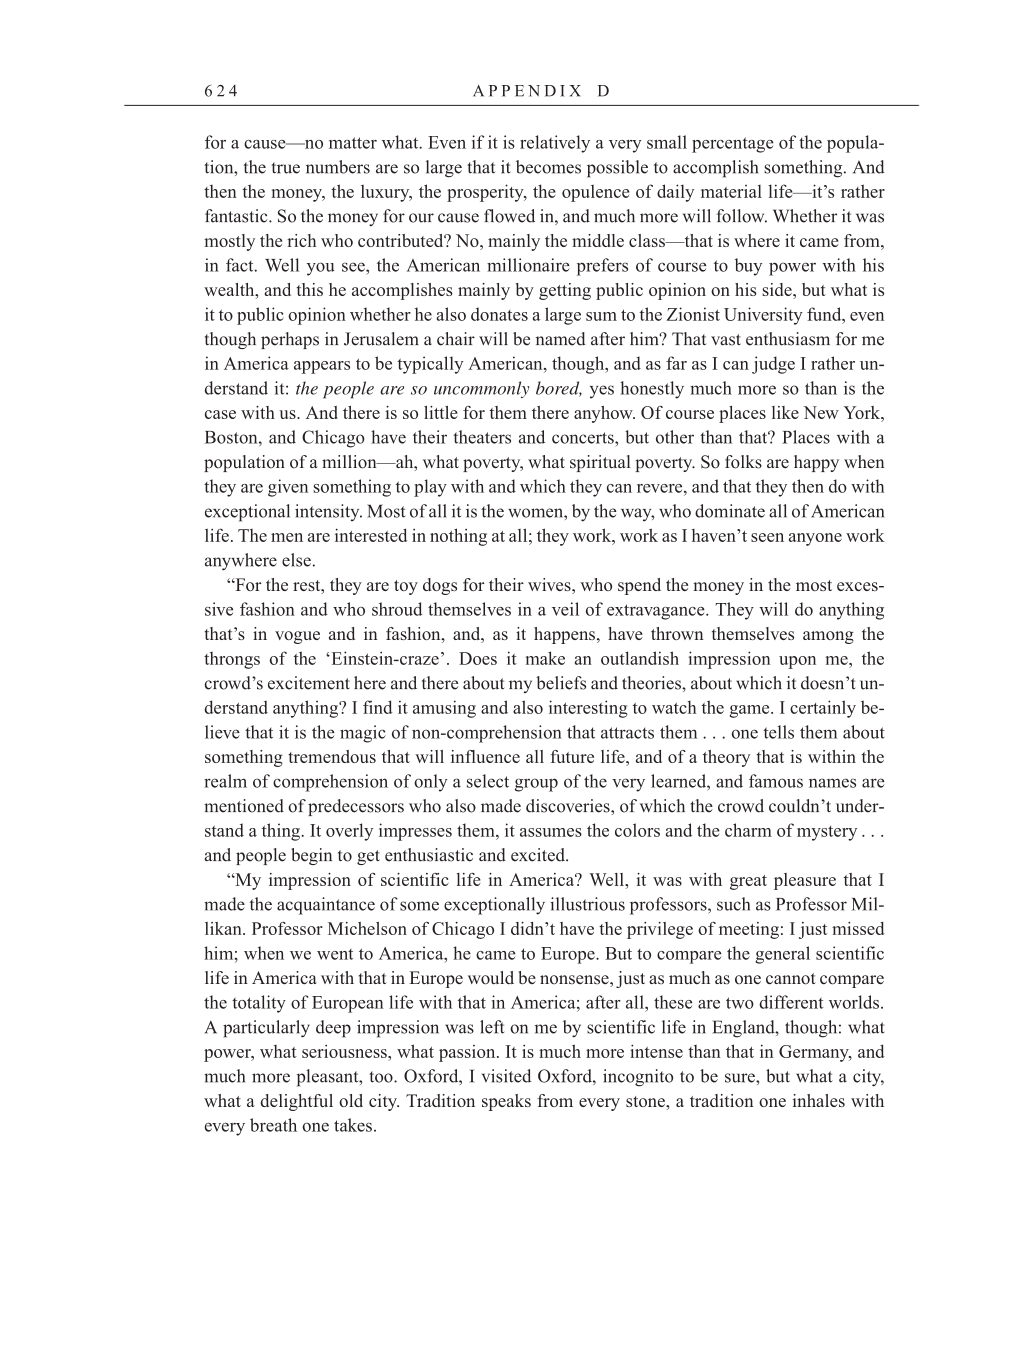 Volume 7: The Berlin Years: Writings, 1918-1921 page 624